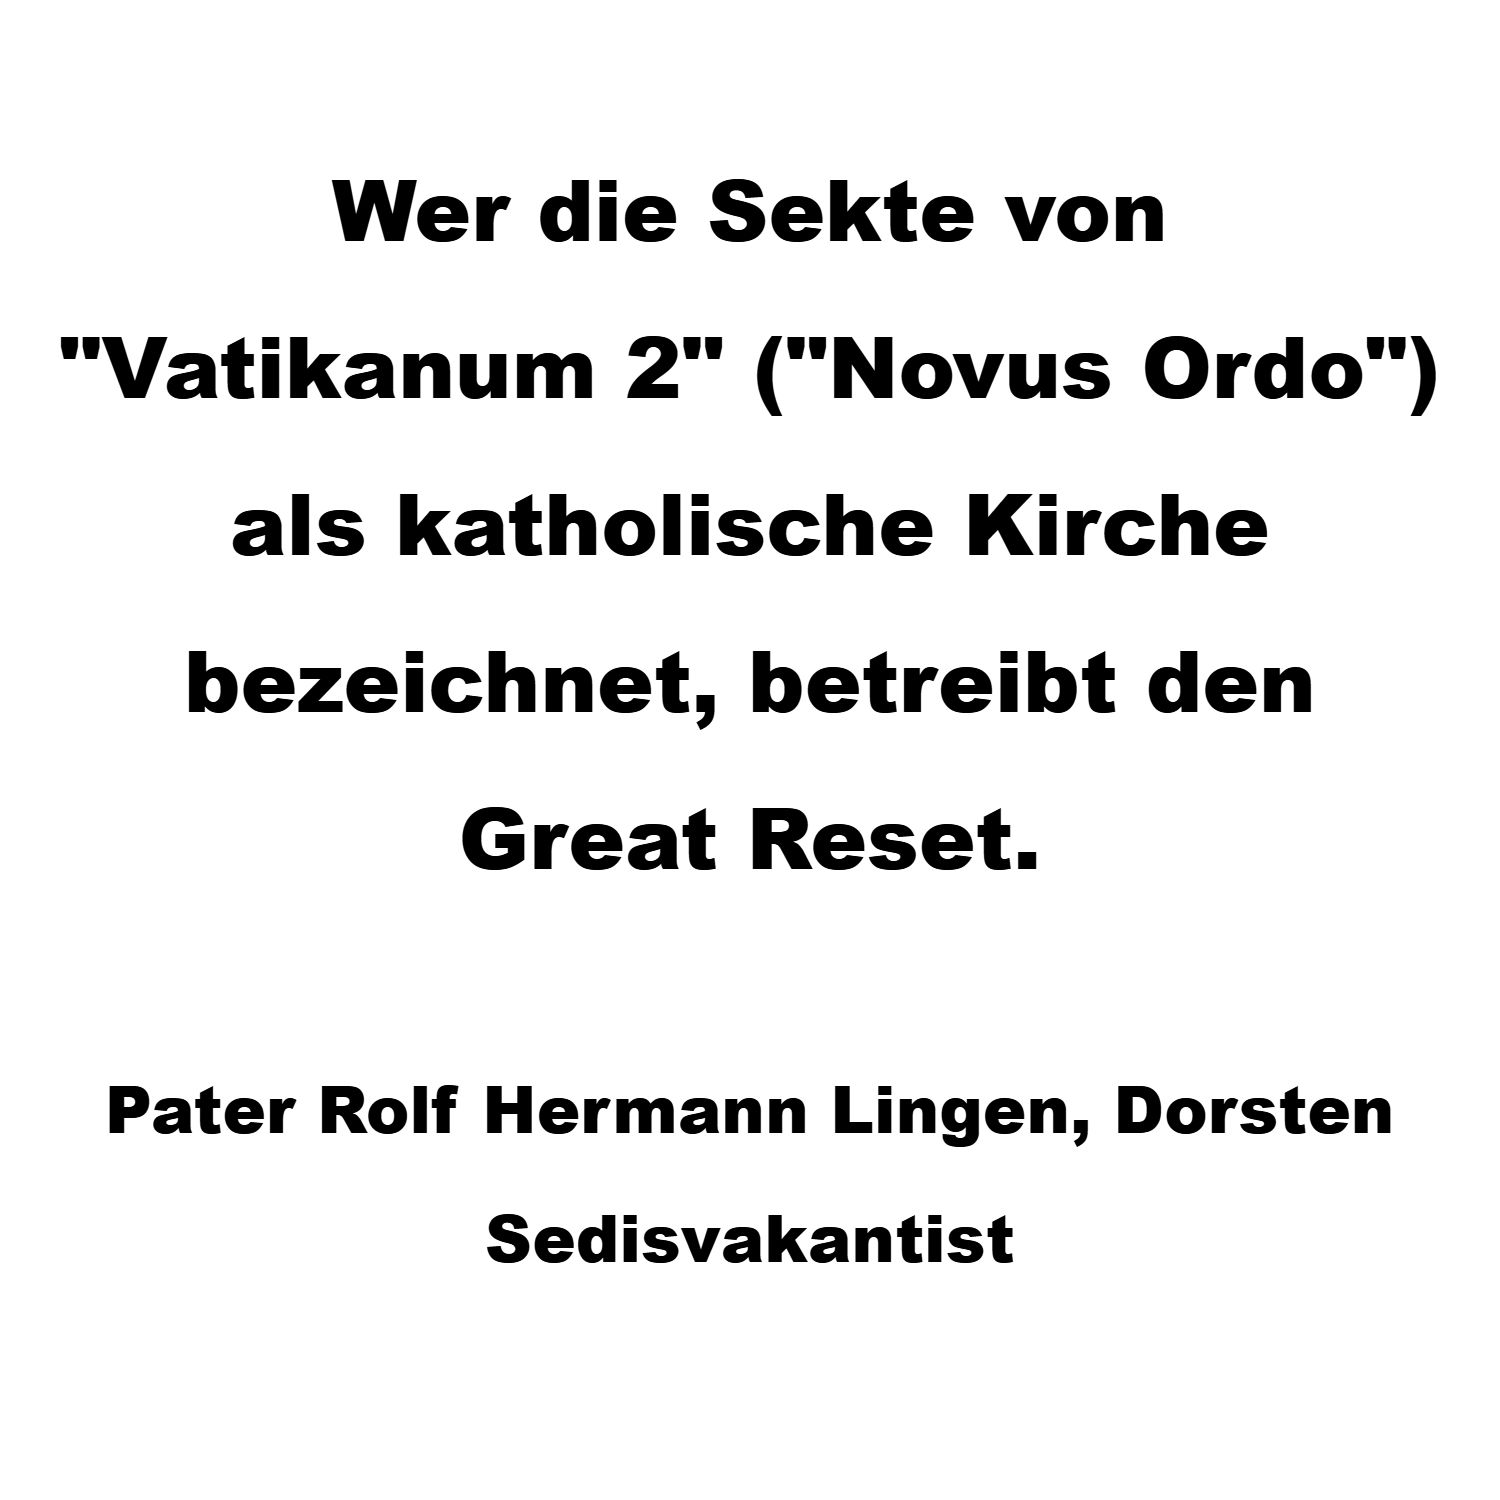 Vatikanum 2 - Novus Ordo - Great
      Reset